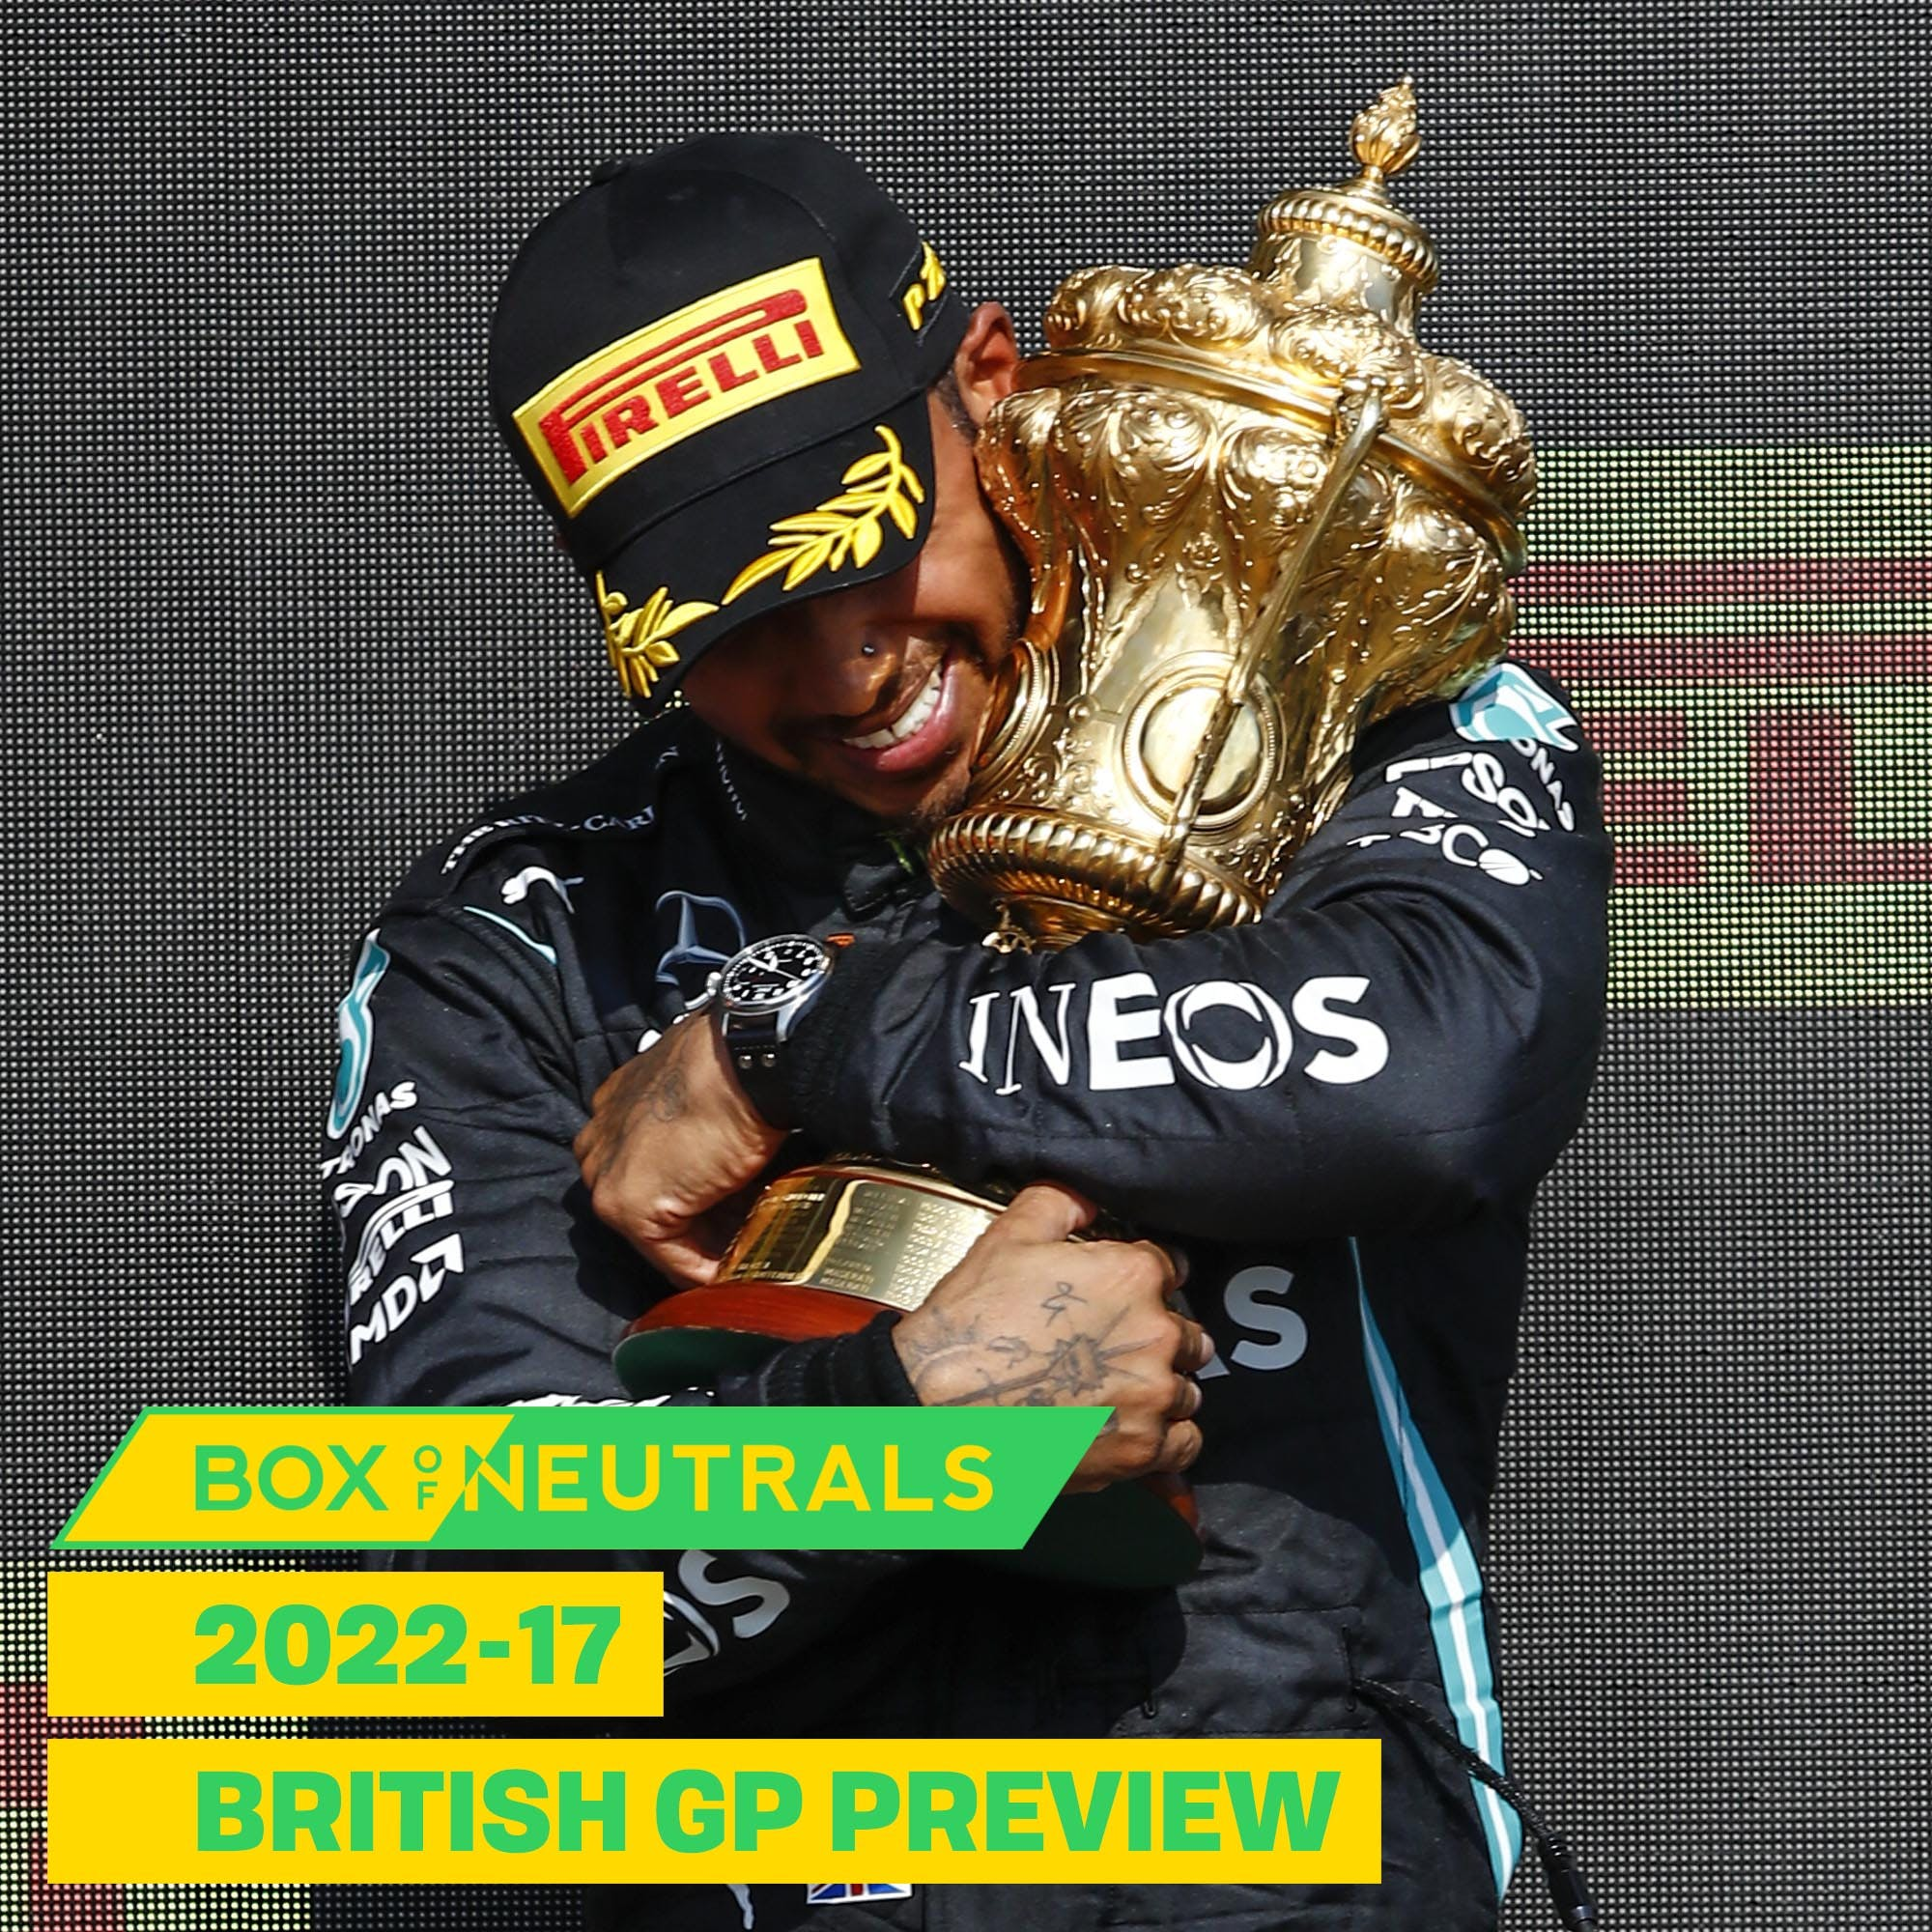 British GP Preview